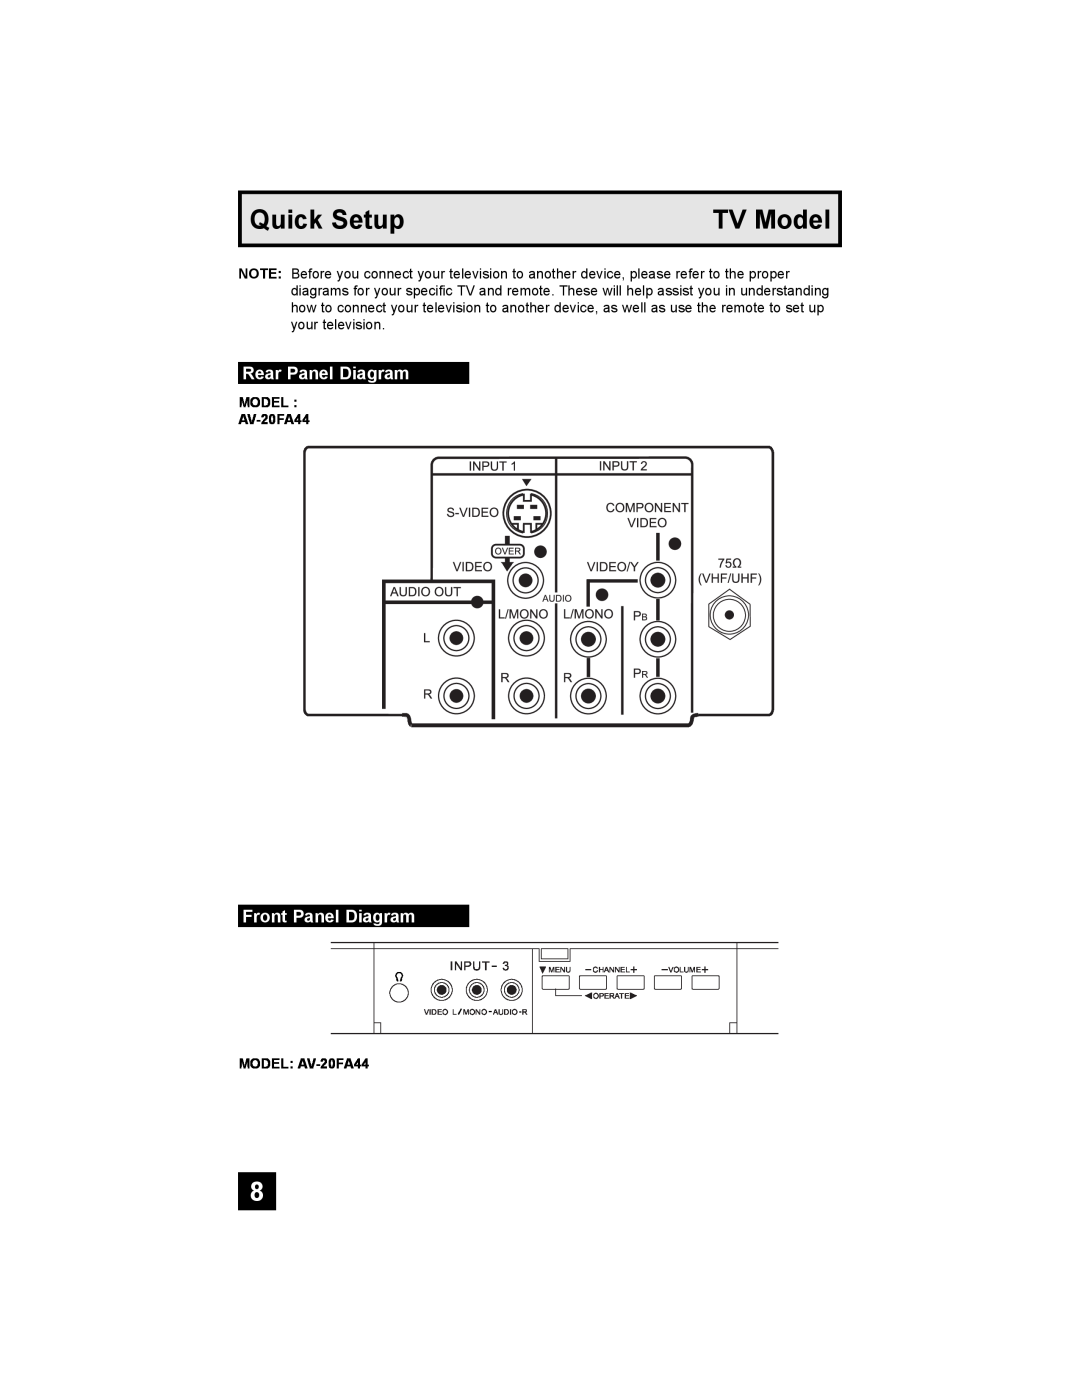 JVC AV 20FA44 manual TV Model, Rear Panel Diagram, Front Panel Diagram, Quick Setup, Input 